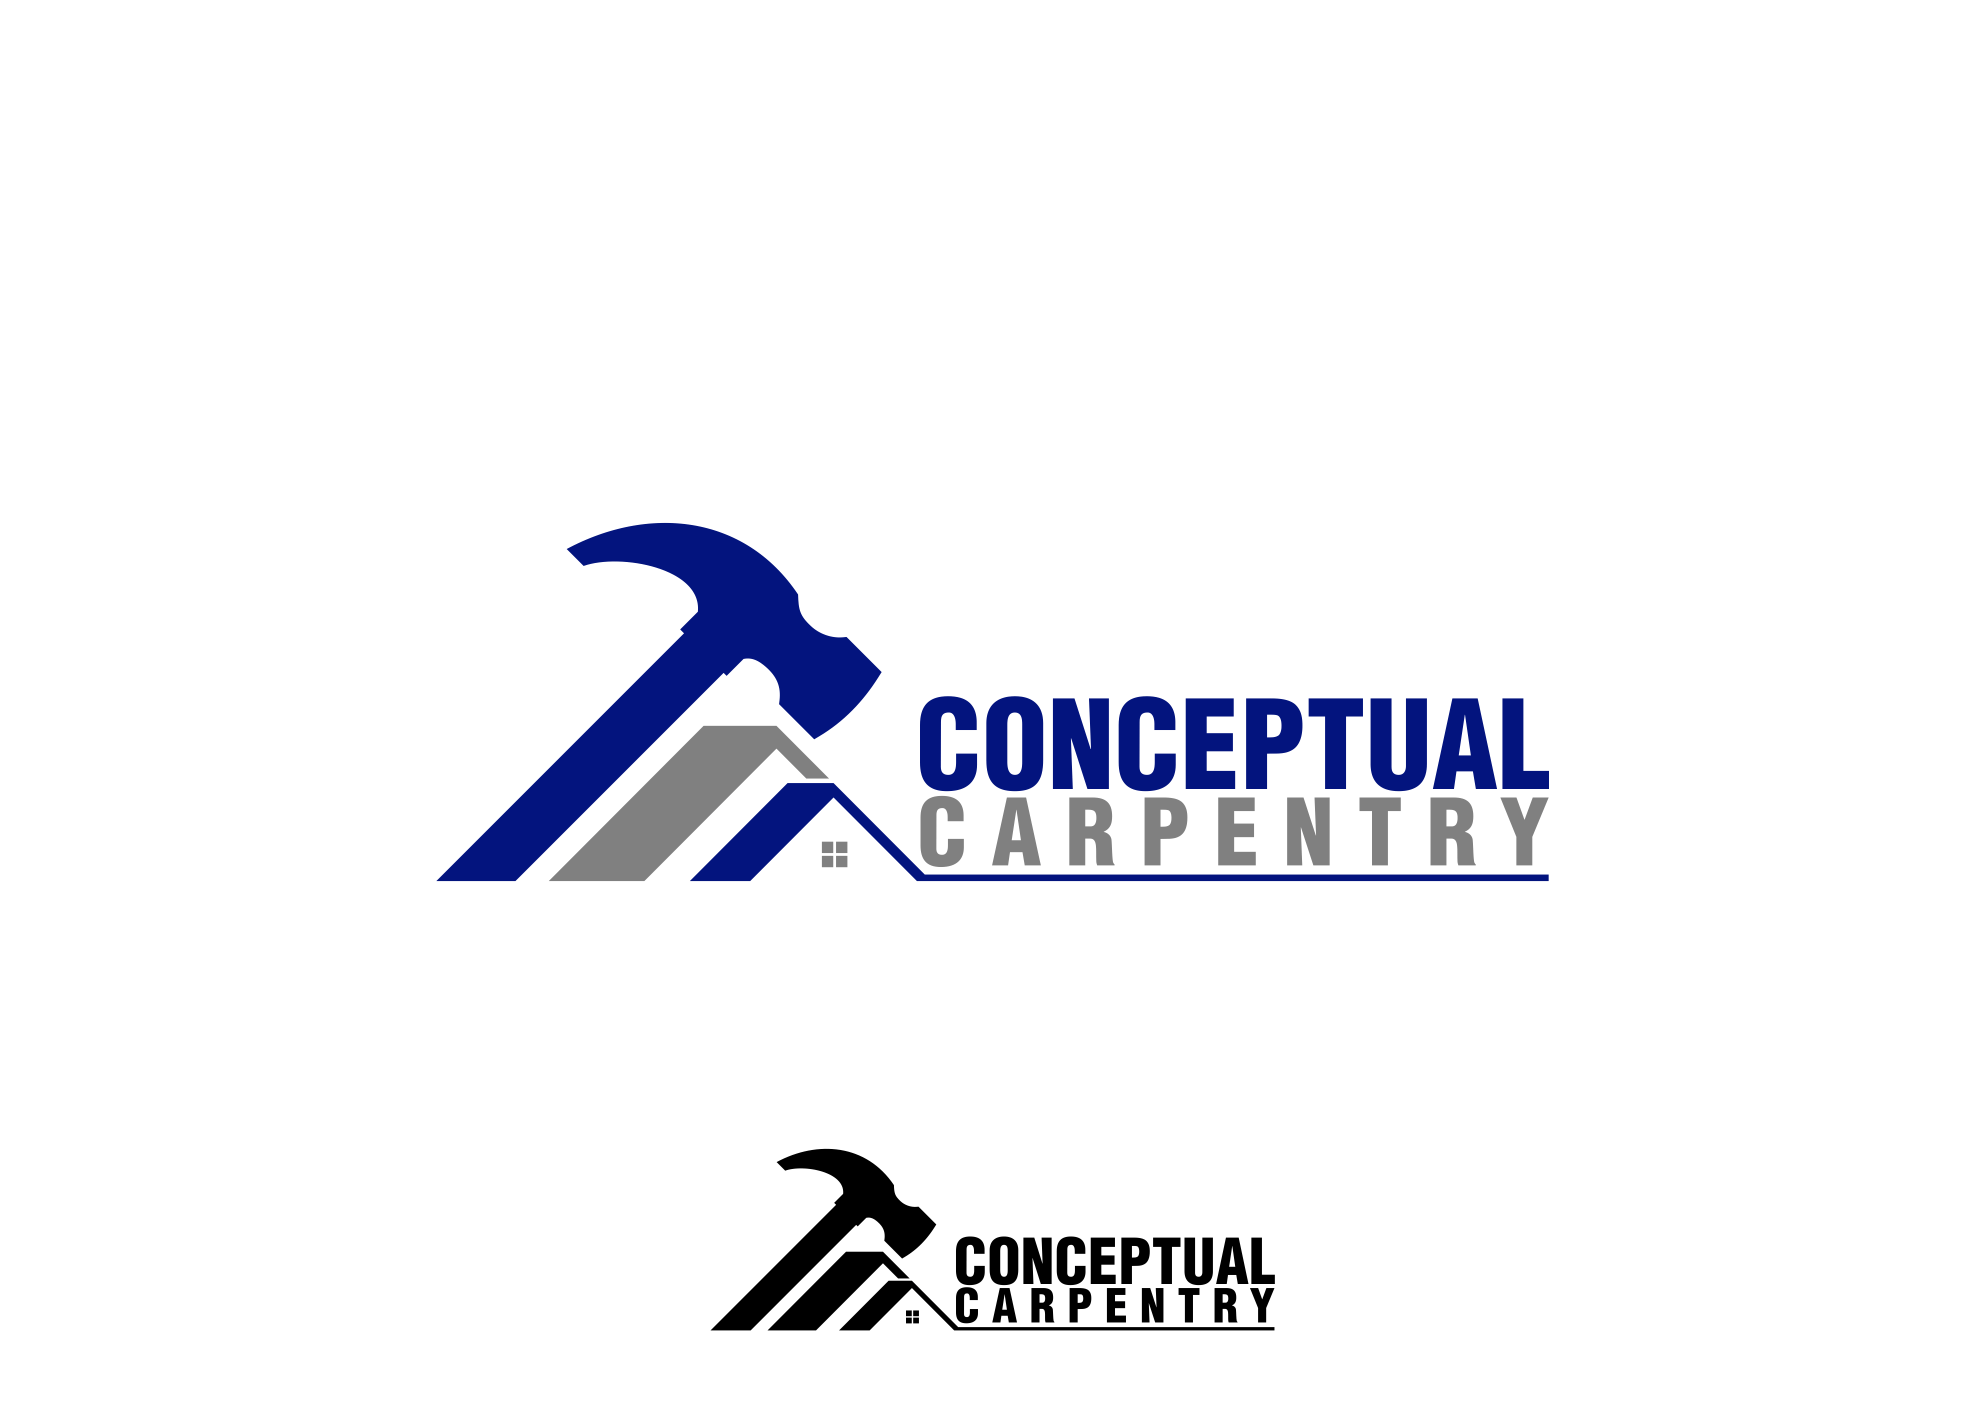 Carpentry Company Logo - Serious, Modern, Construction Company Logo Design for Conceptual